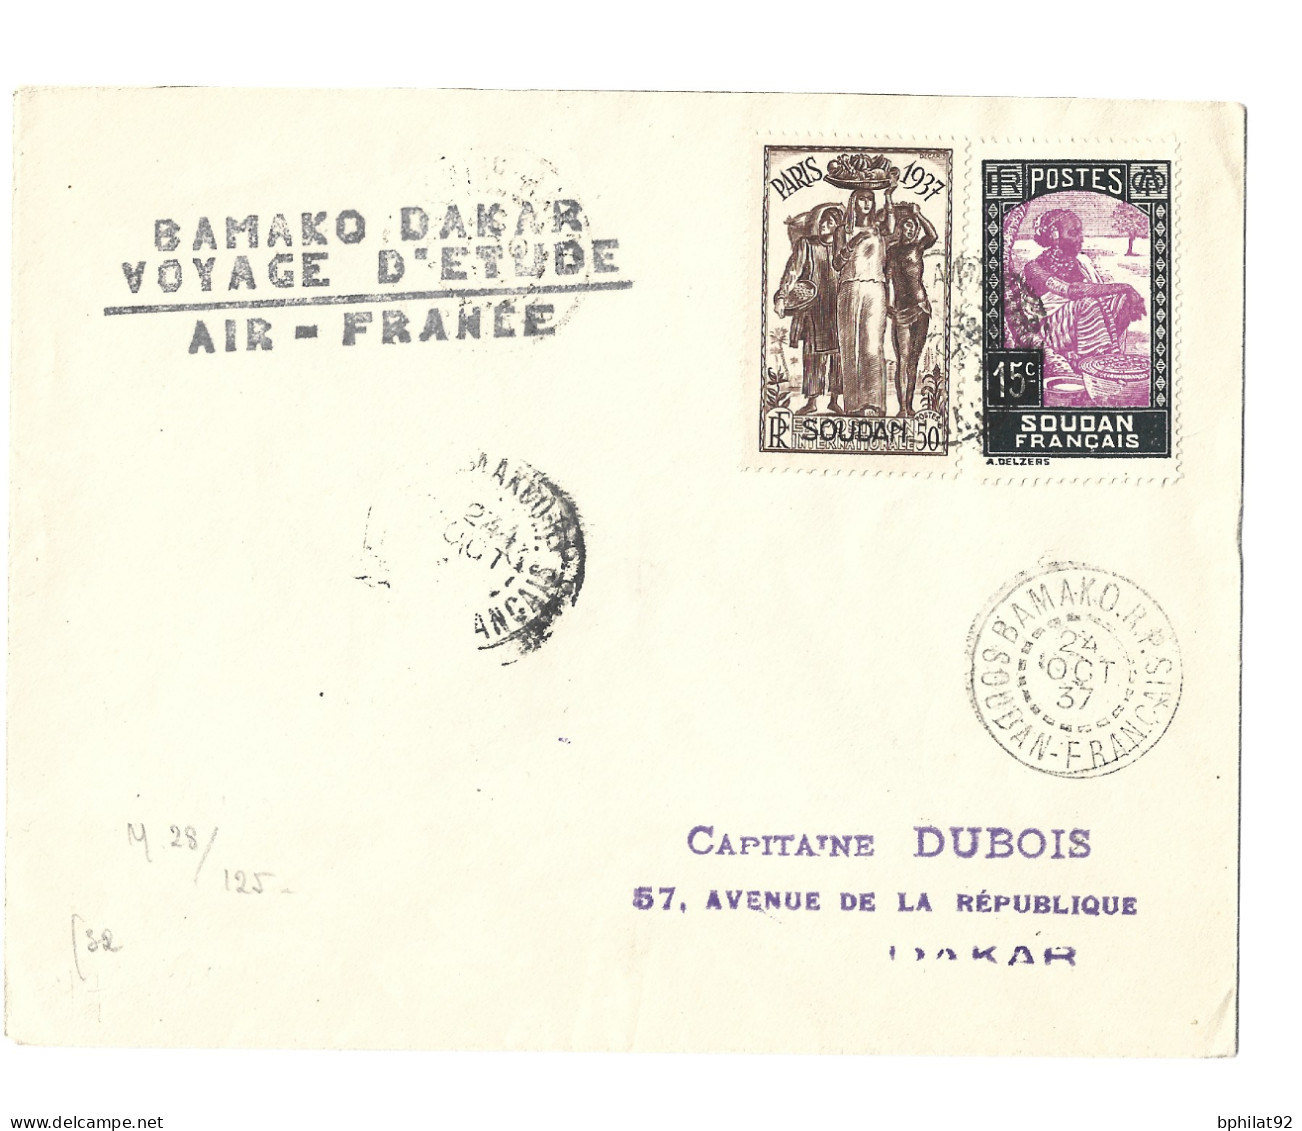 !!! BAMAKO-DAKAR, VOYAGE D'ÉTUDE AIR FRANCE OCTOBRE 1937, CACHET DU SOUDAN FRANÇAIS - Lettres & Documents